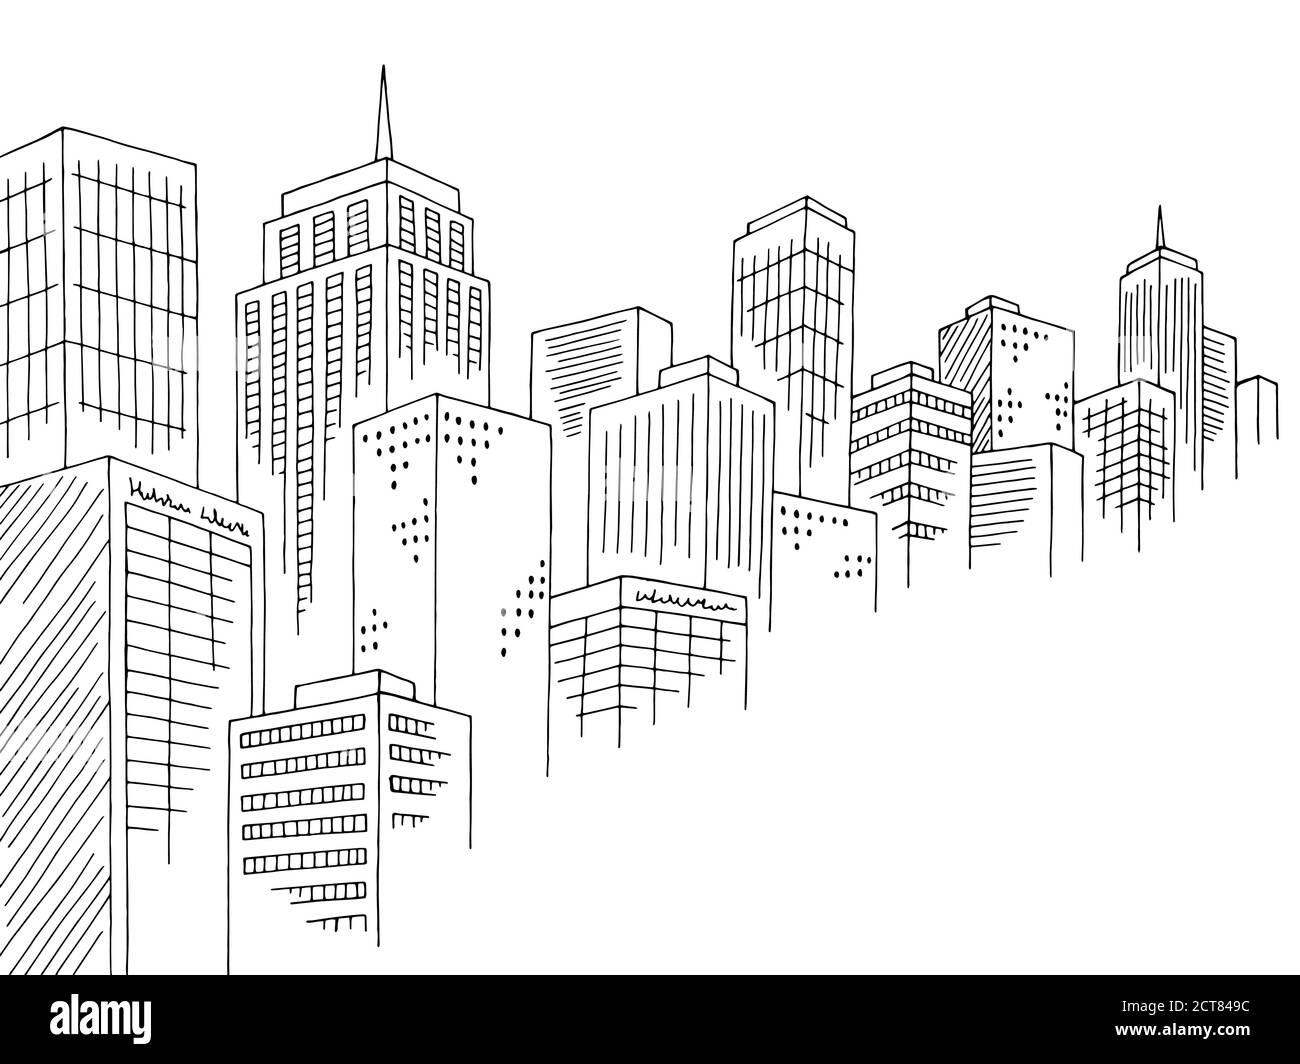 Stadt Grafik schwarz weiß Stadtbild Skizze Illustration Vektor Stock Vektor